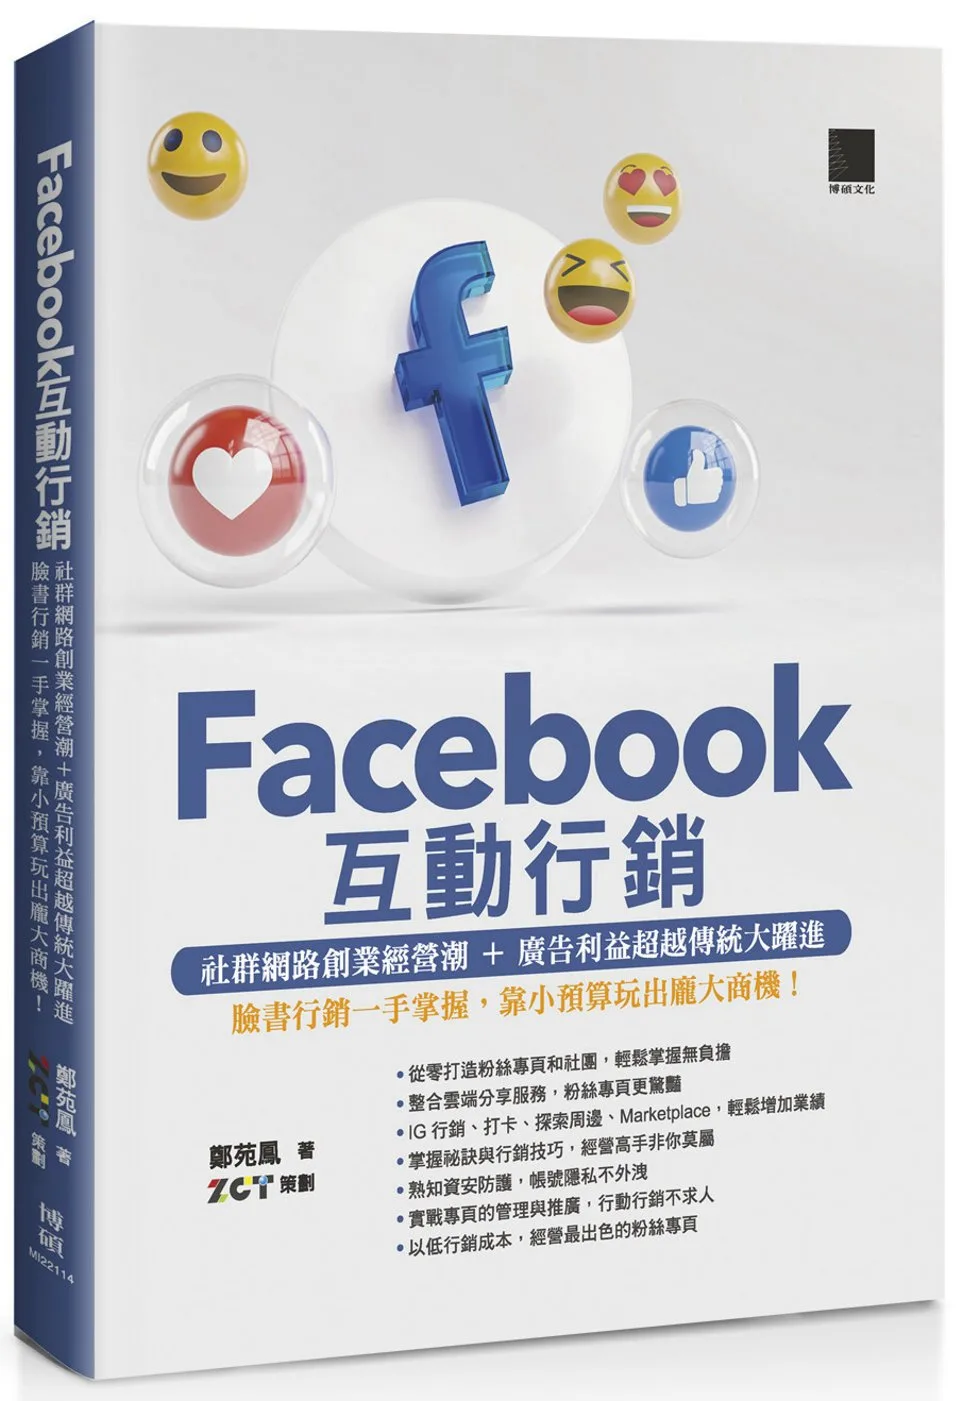 Facebook互動行銷—社群網路創業經營潮+廣告利益超越傳統大躍進•臉書行銷一手掌握，靠小預算玩出龐大商機！